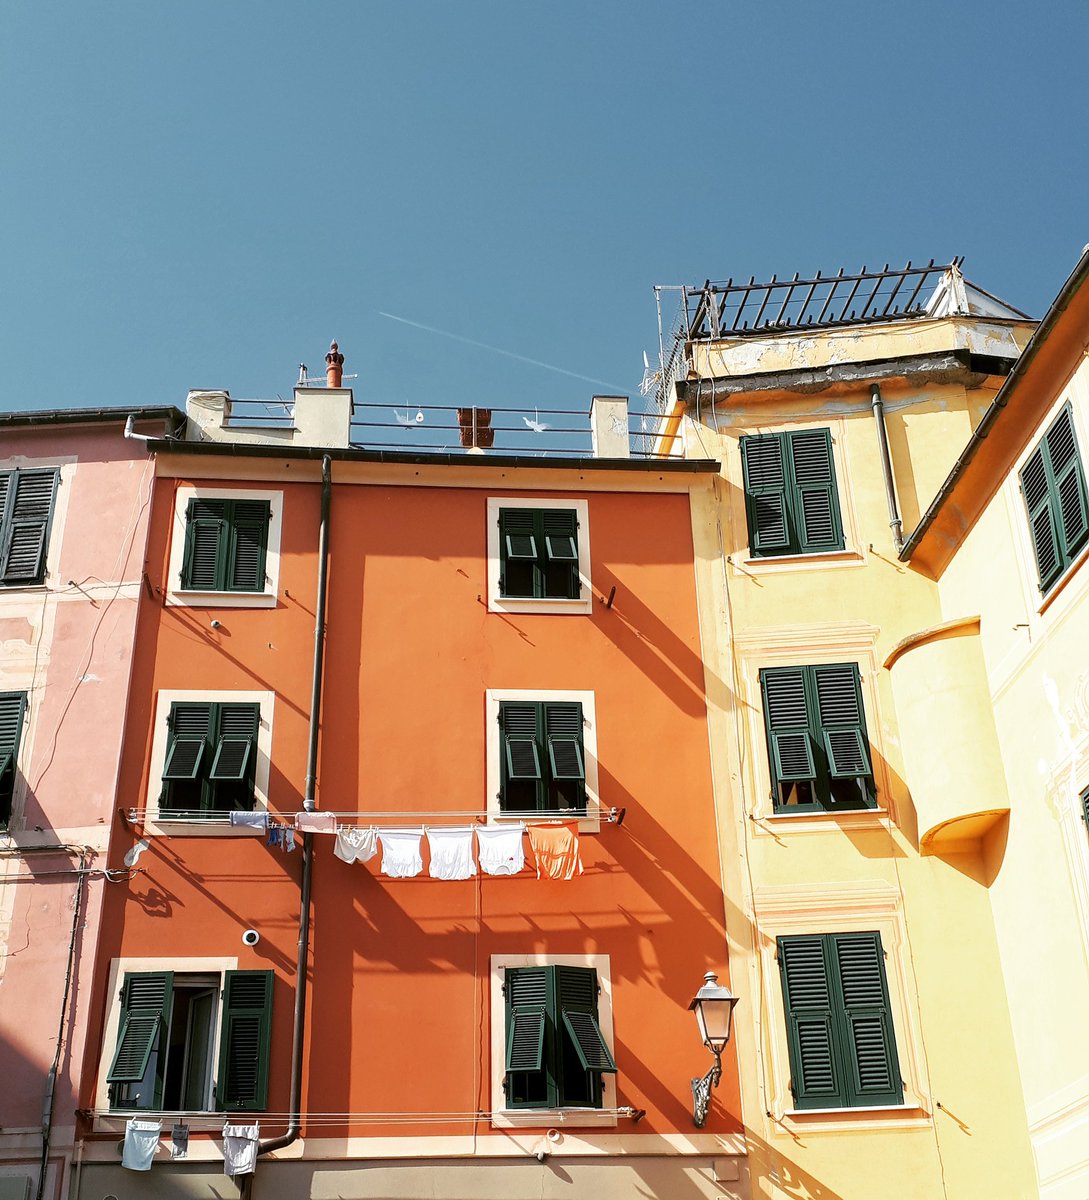 Tre facciate.
.
#Liguria #estate #Nervi #sole #Mediterraneo #Italia #igliguria #igersliguria #Genova